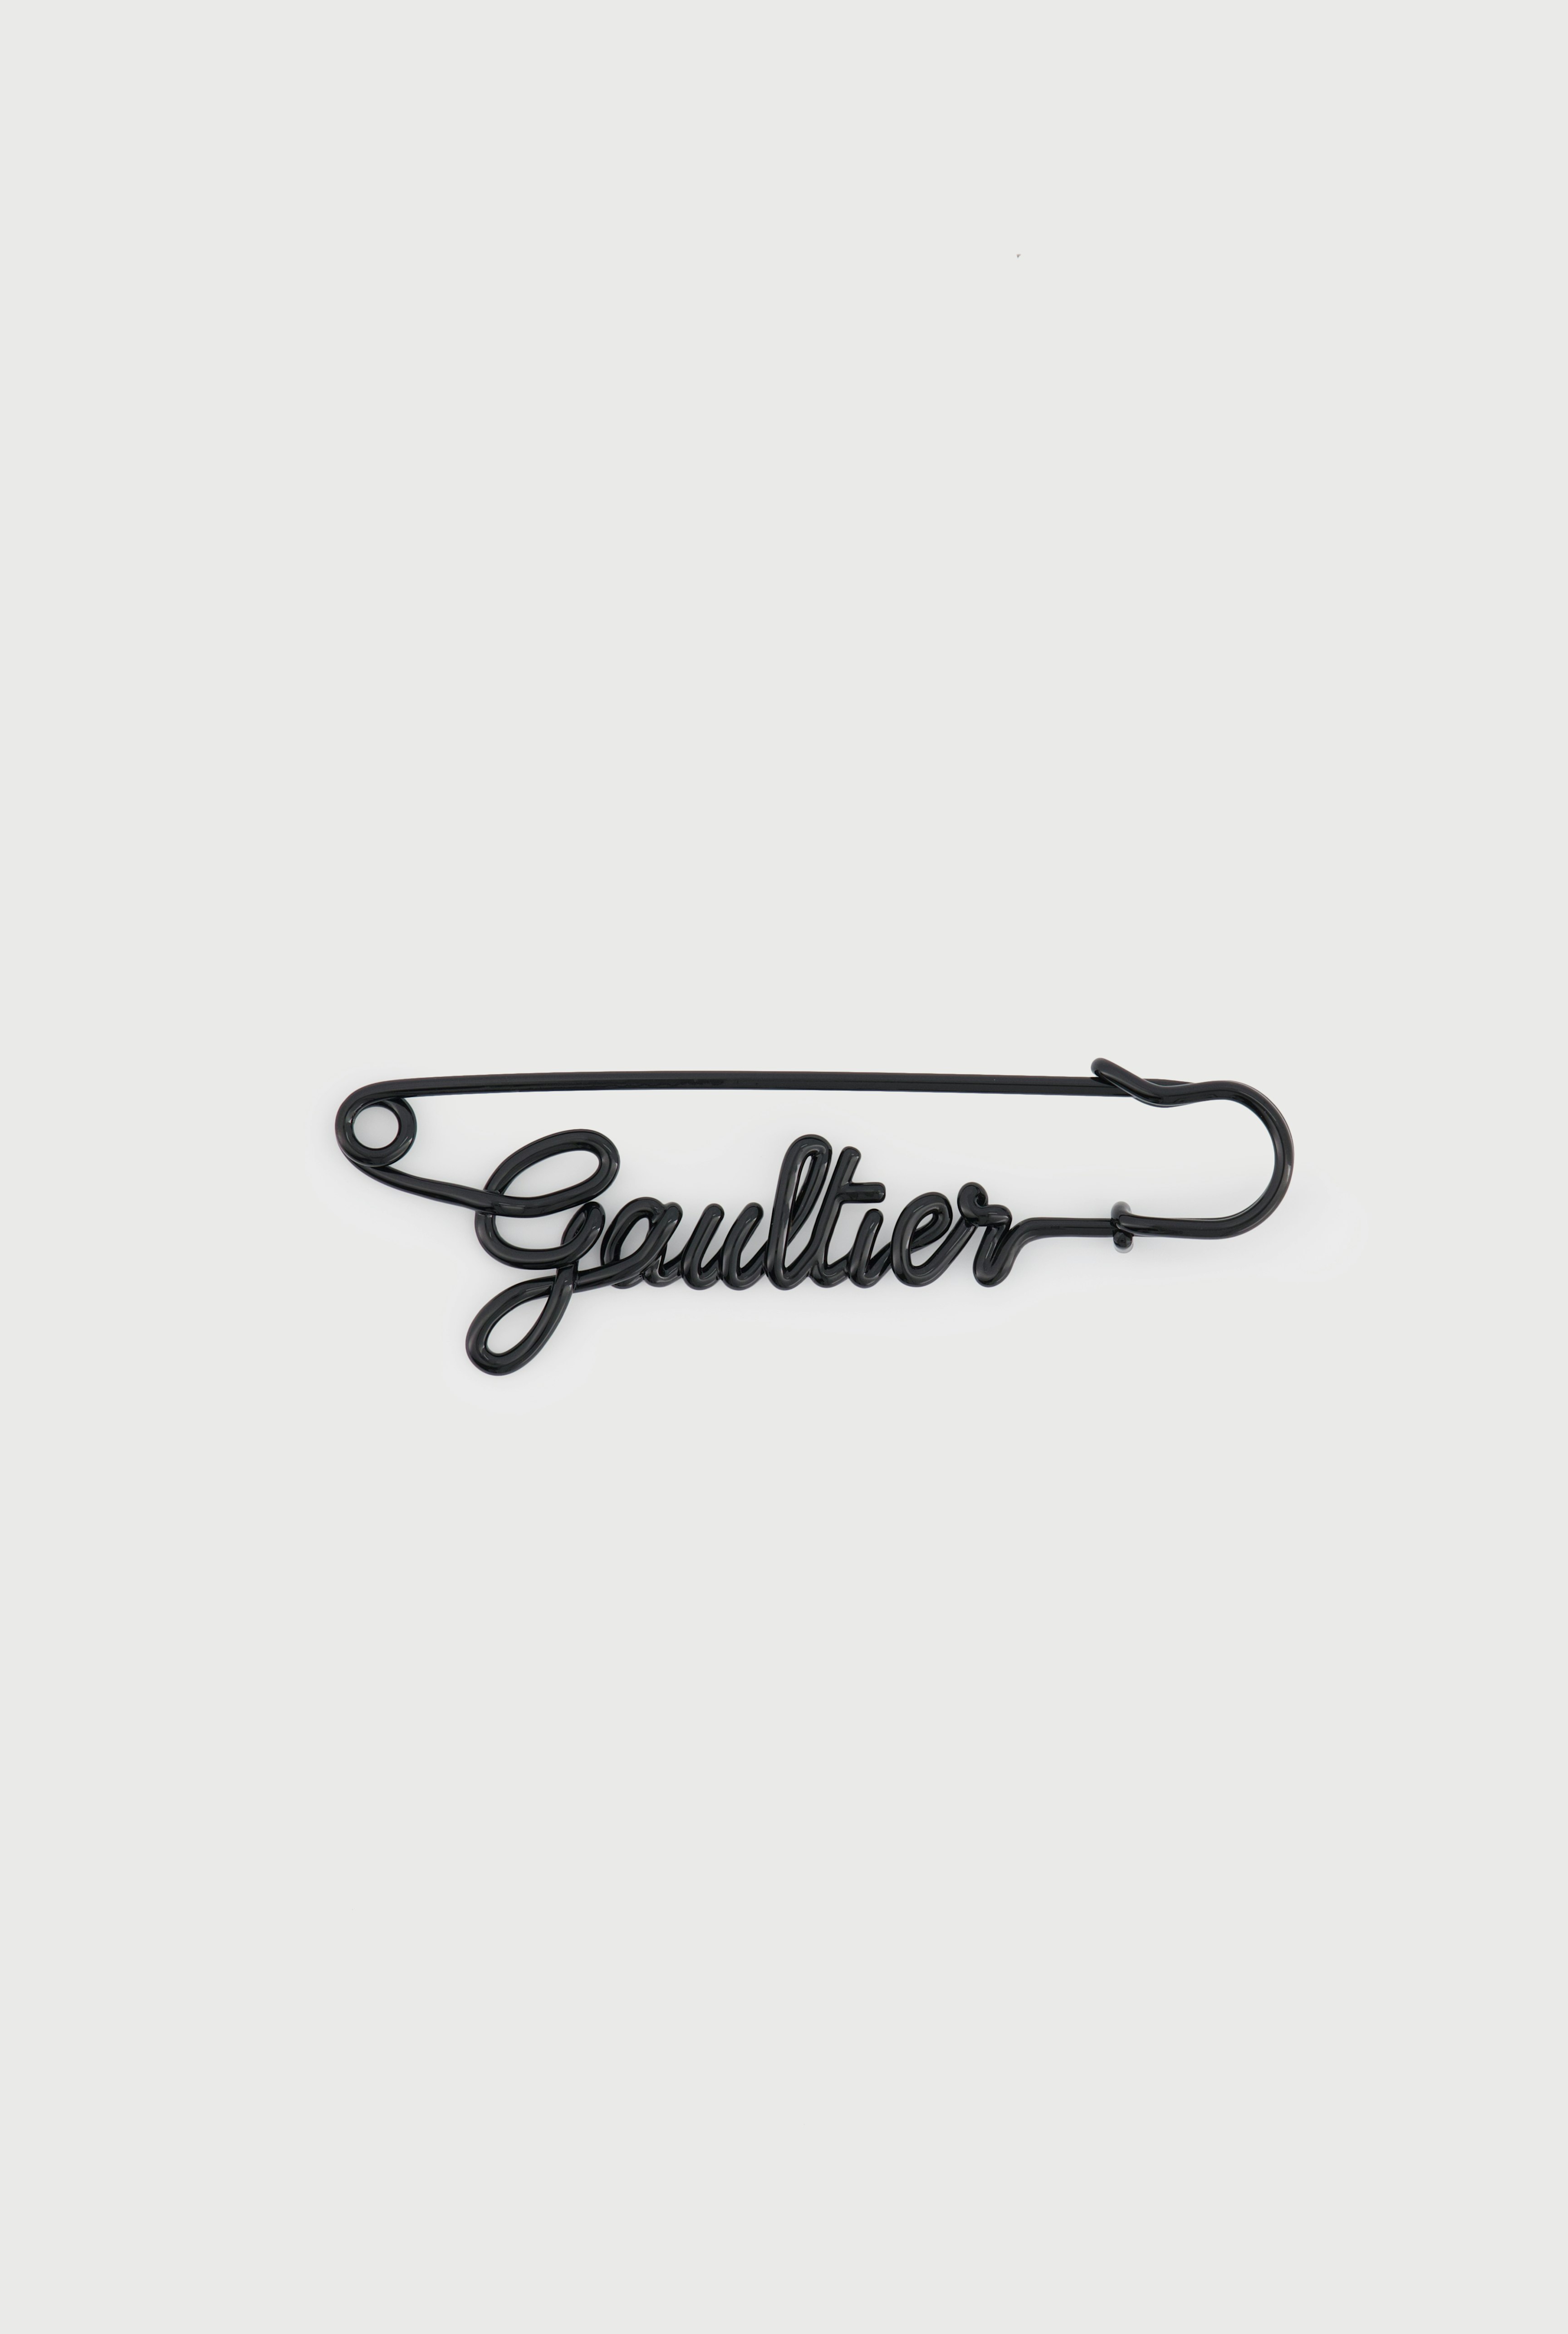 The Black Gaultier Brooch